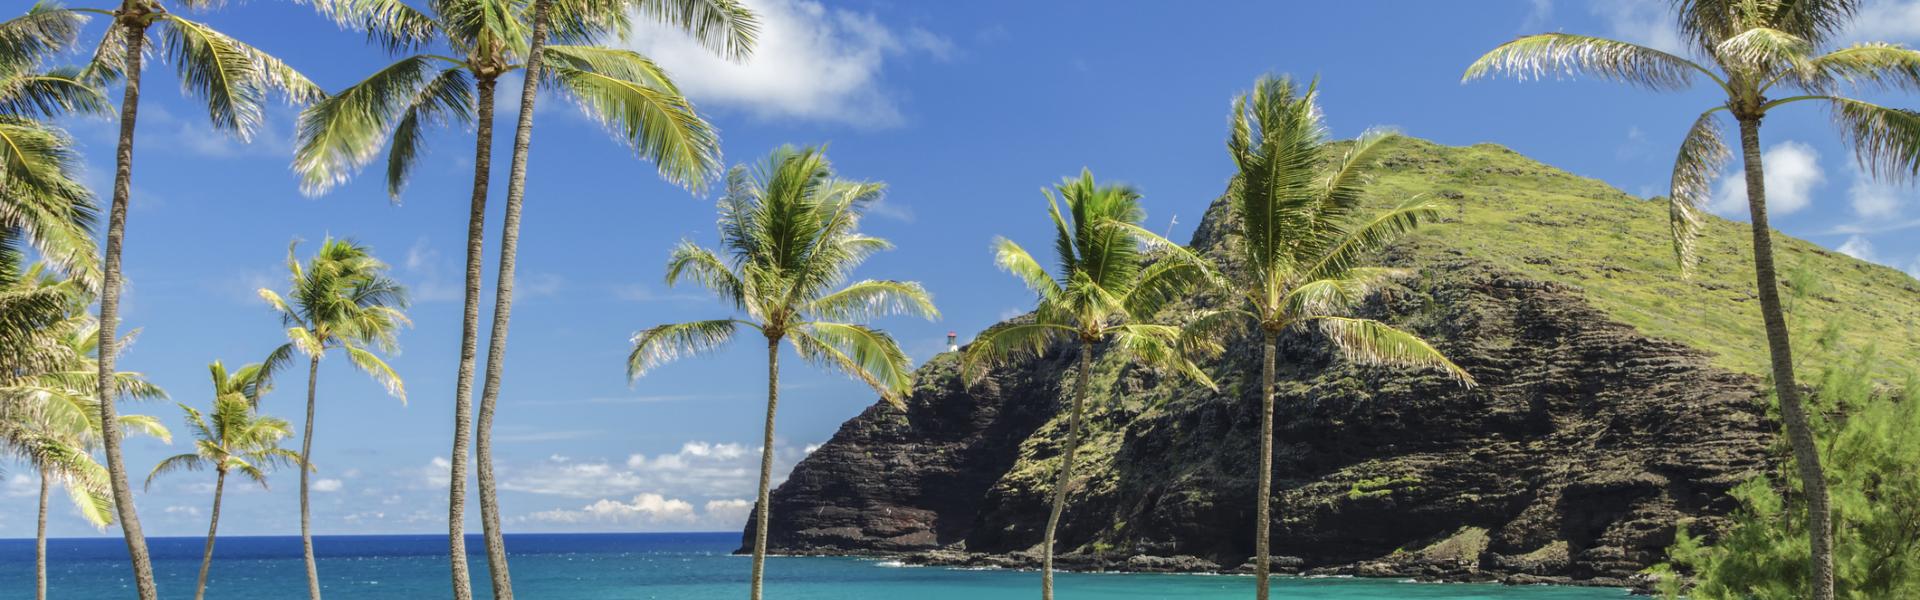 Oahu Island Vacation Rentals - Wimdu